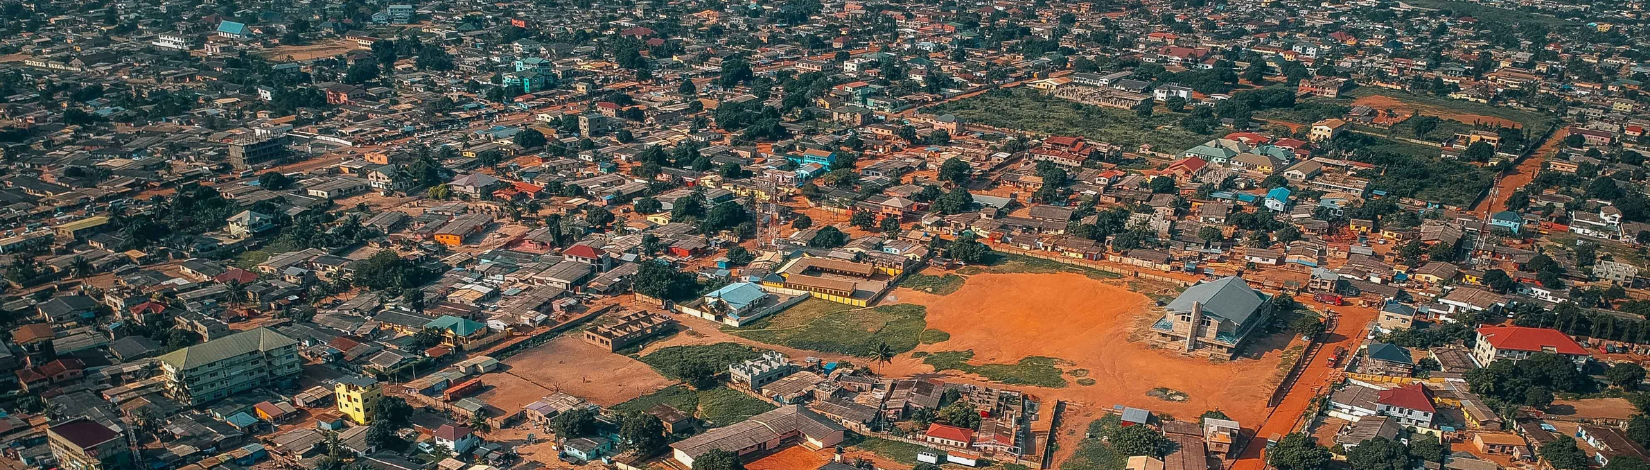 African neighborhoods